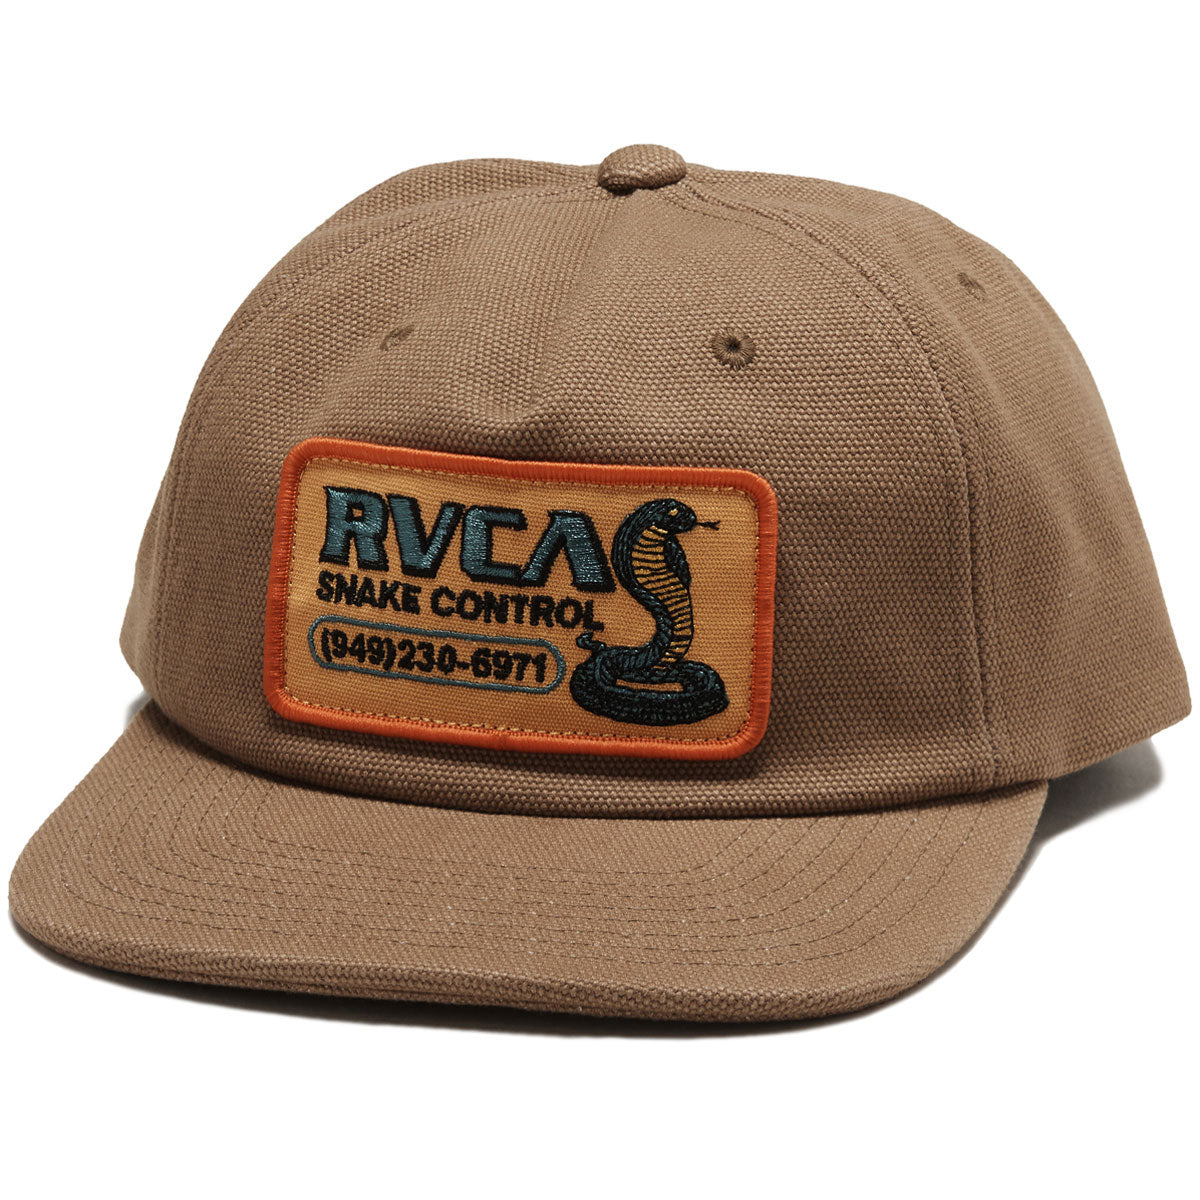 RVCA Snake Control Snapback Hat - Rawhide image 1